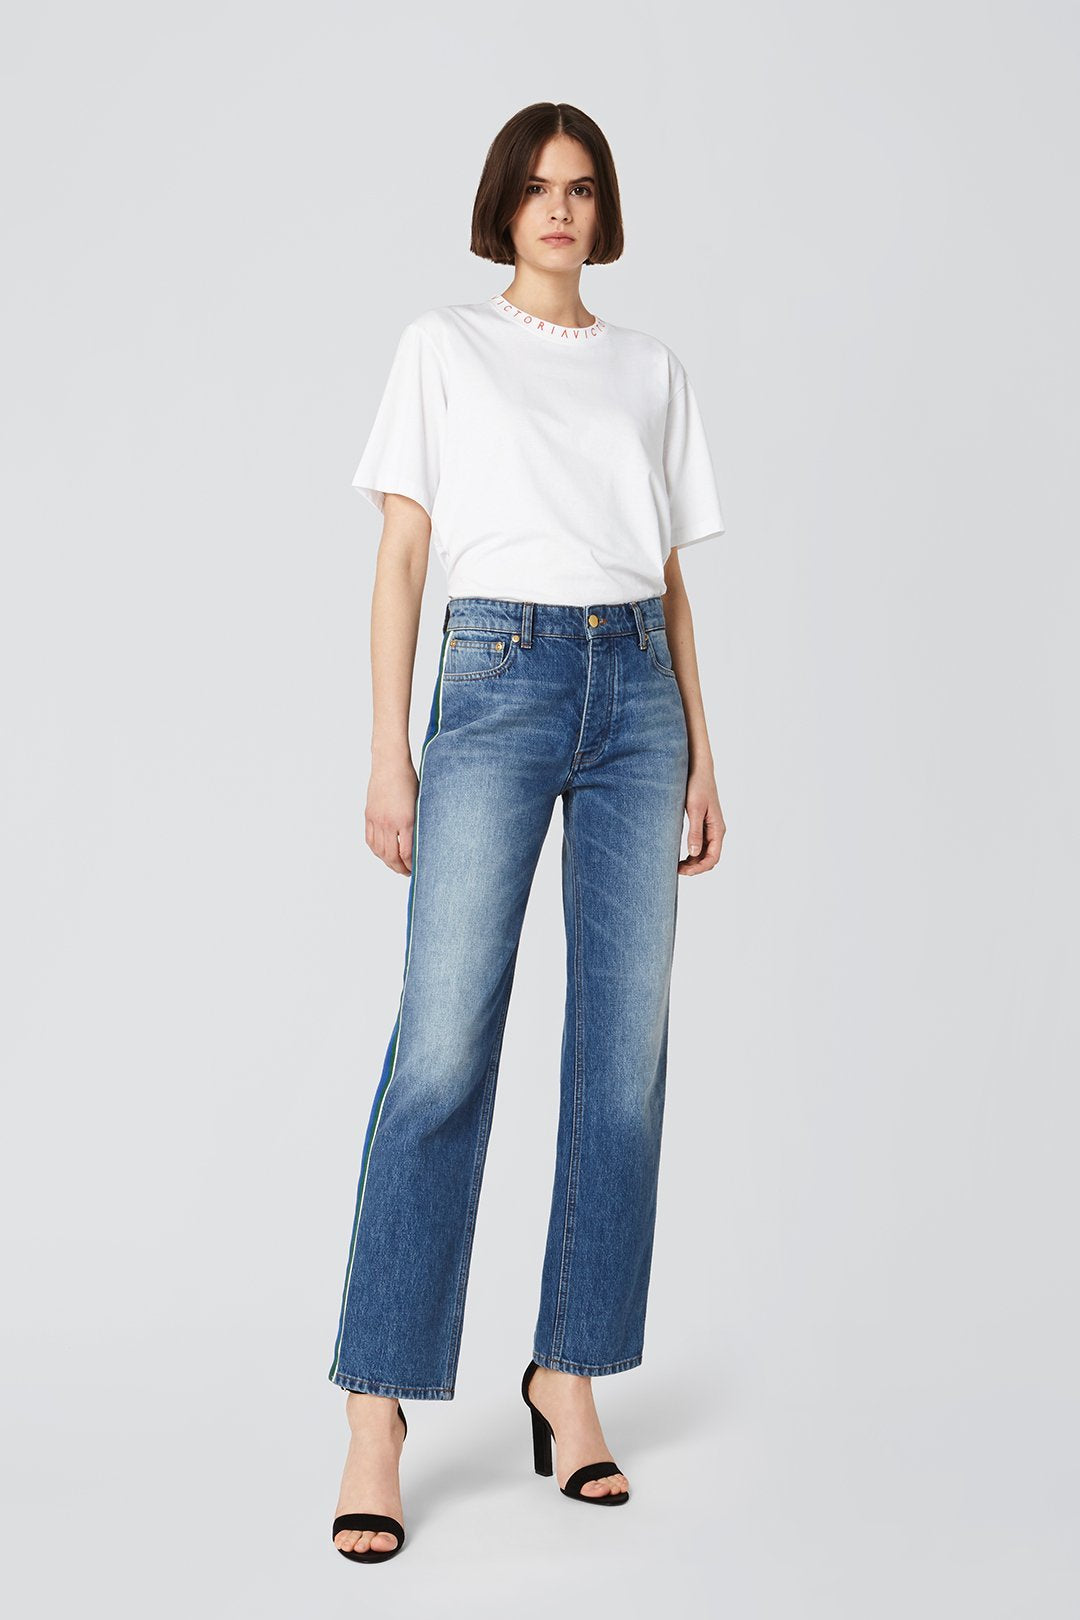 arizona jeans